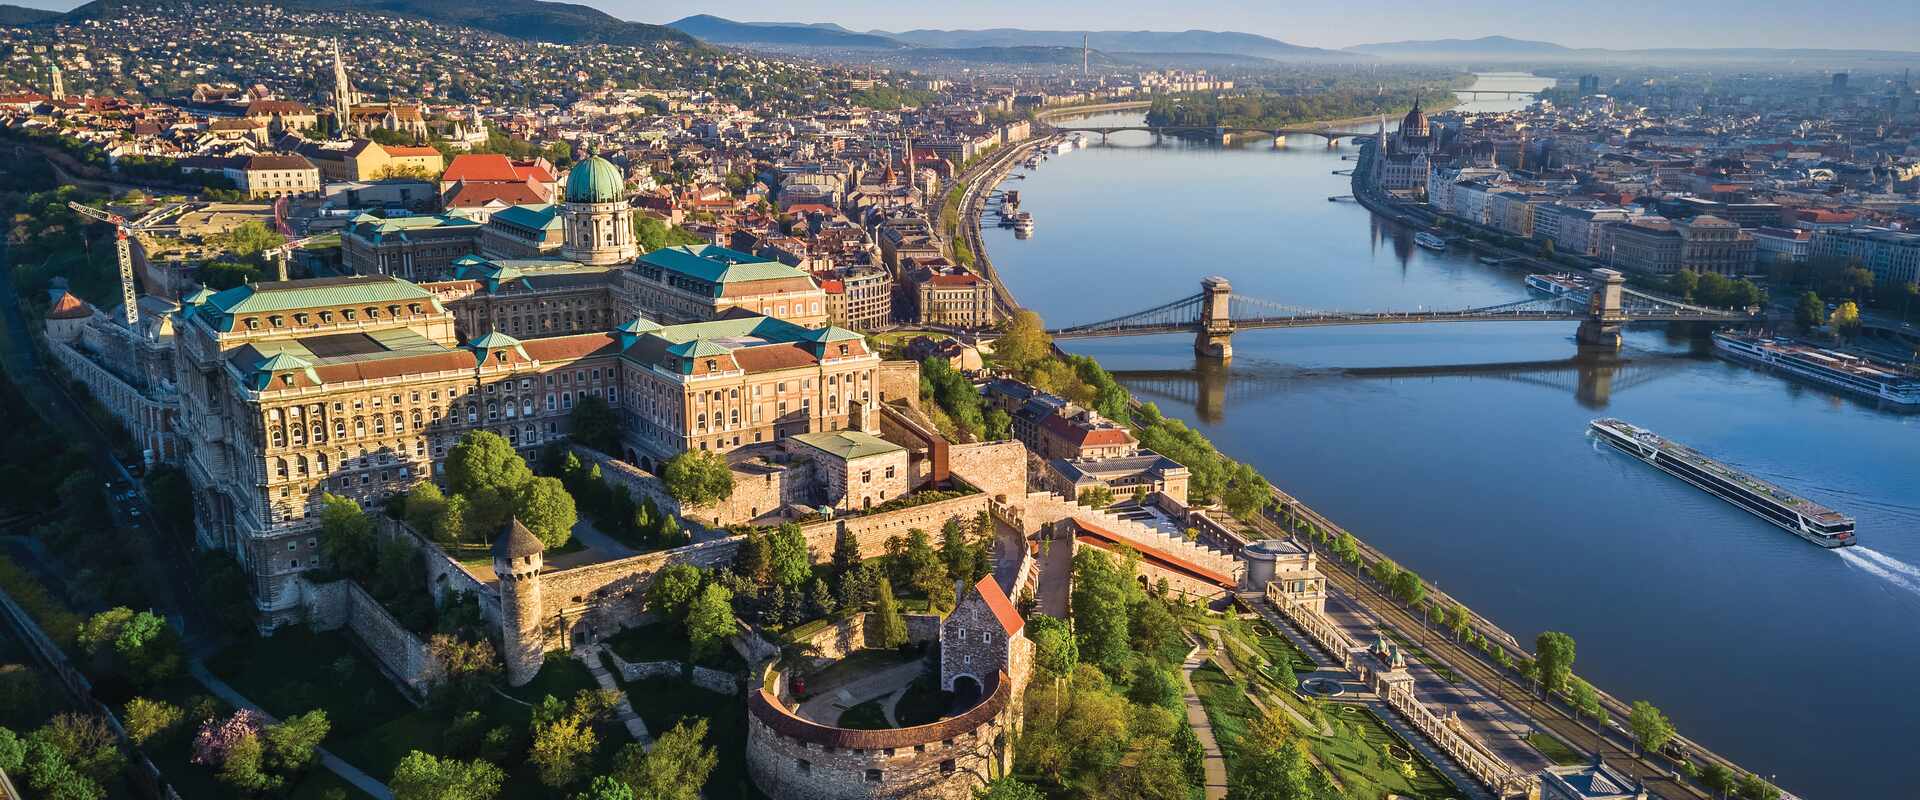 Chain Bridge along the Danube River in Budapest